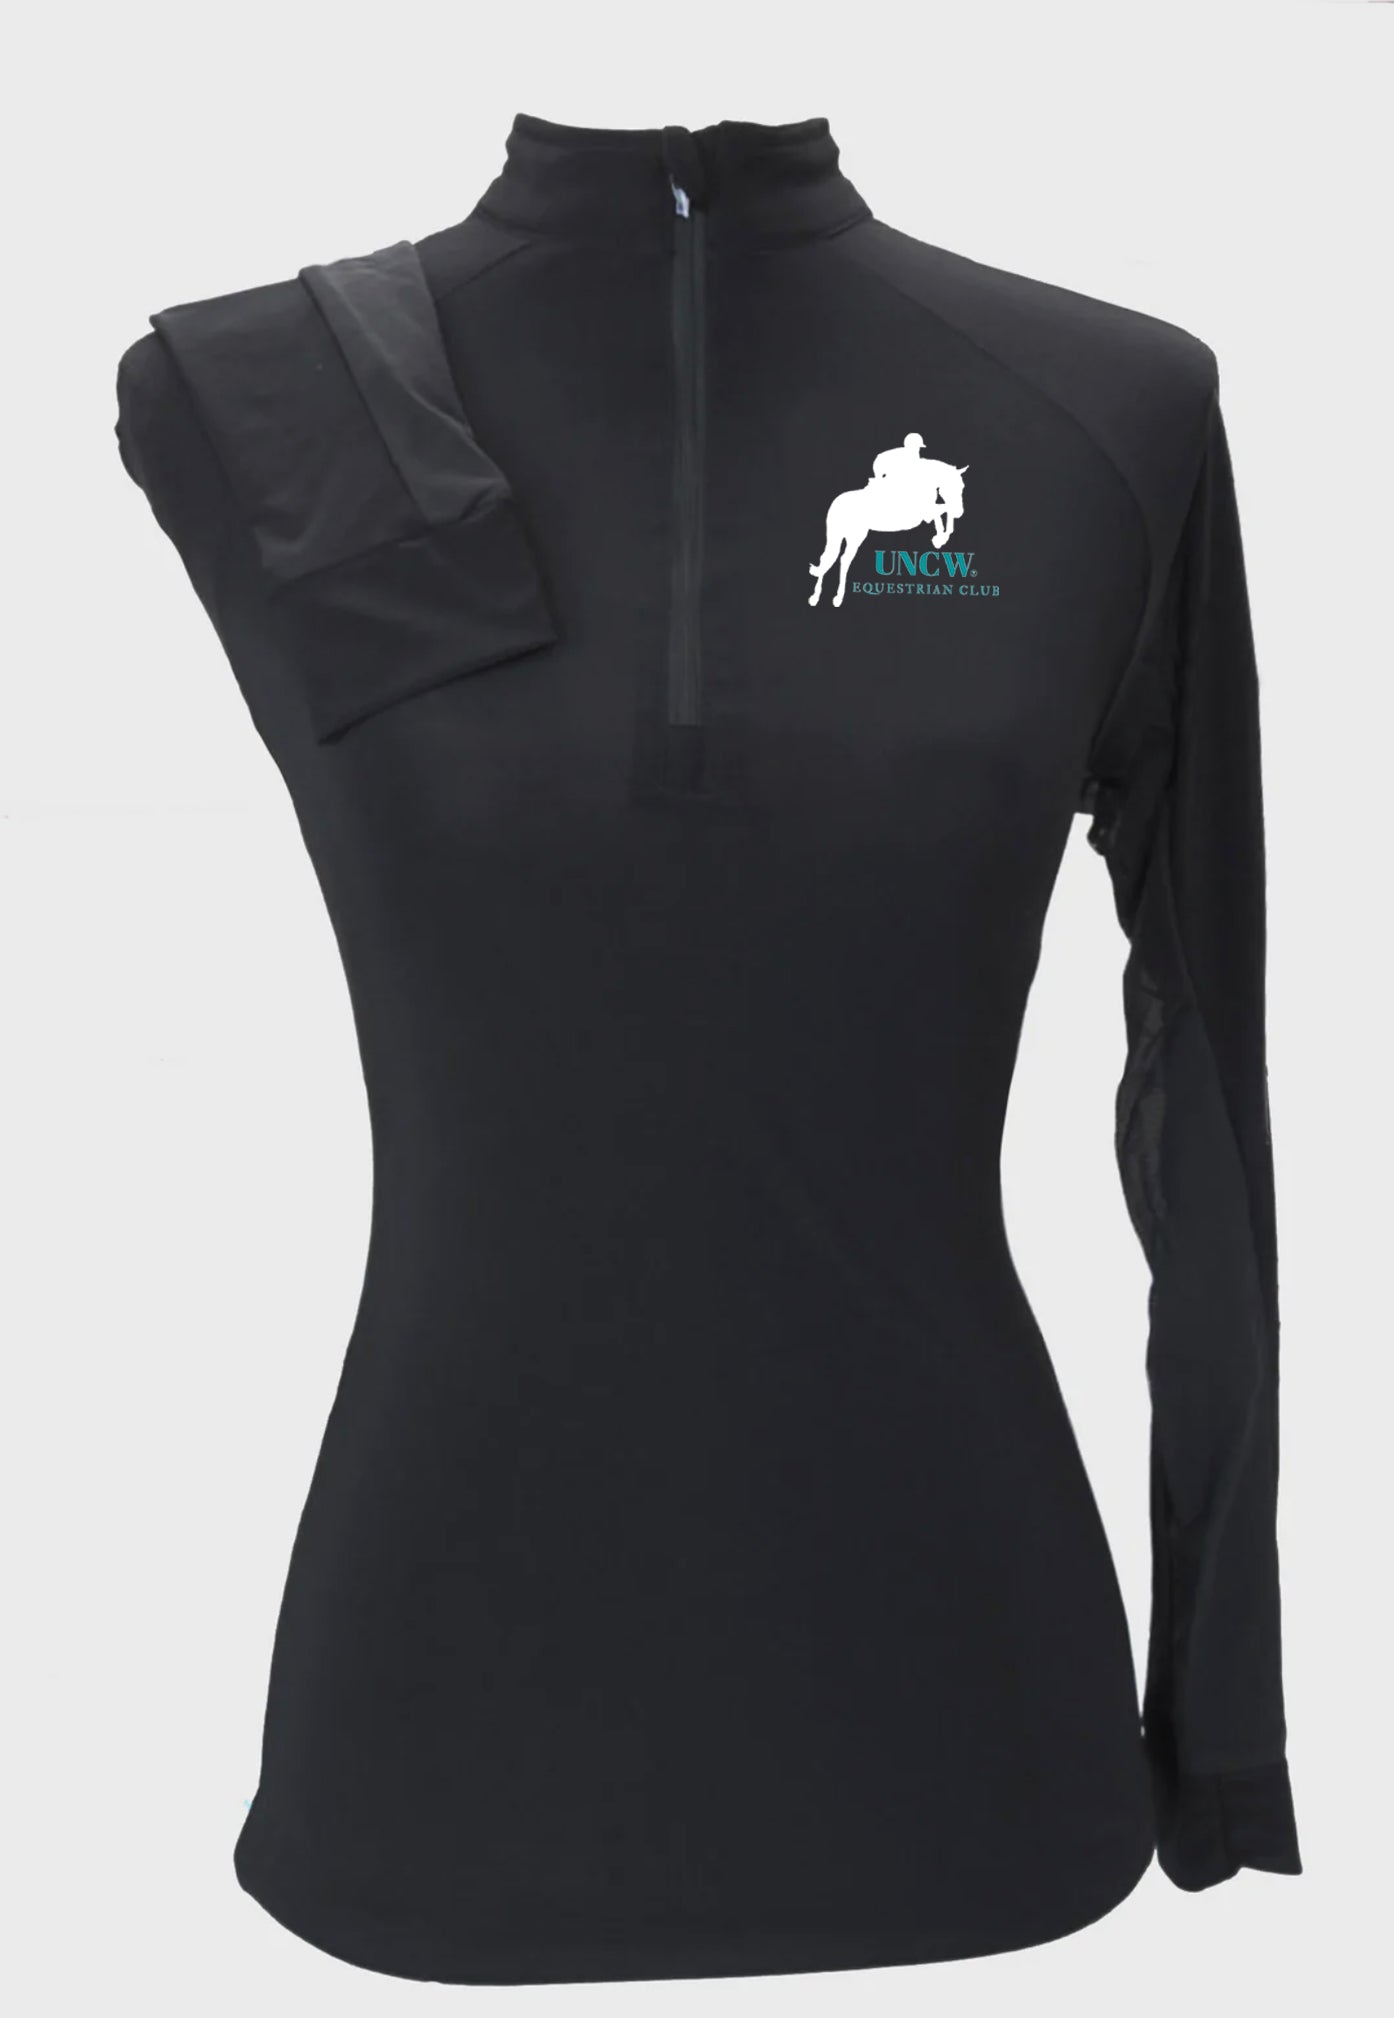 UNCW Equestrian Club Long-Sleeve Black Sun Shirt, Ladies + Youth Sizes